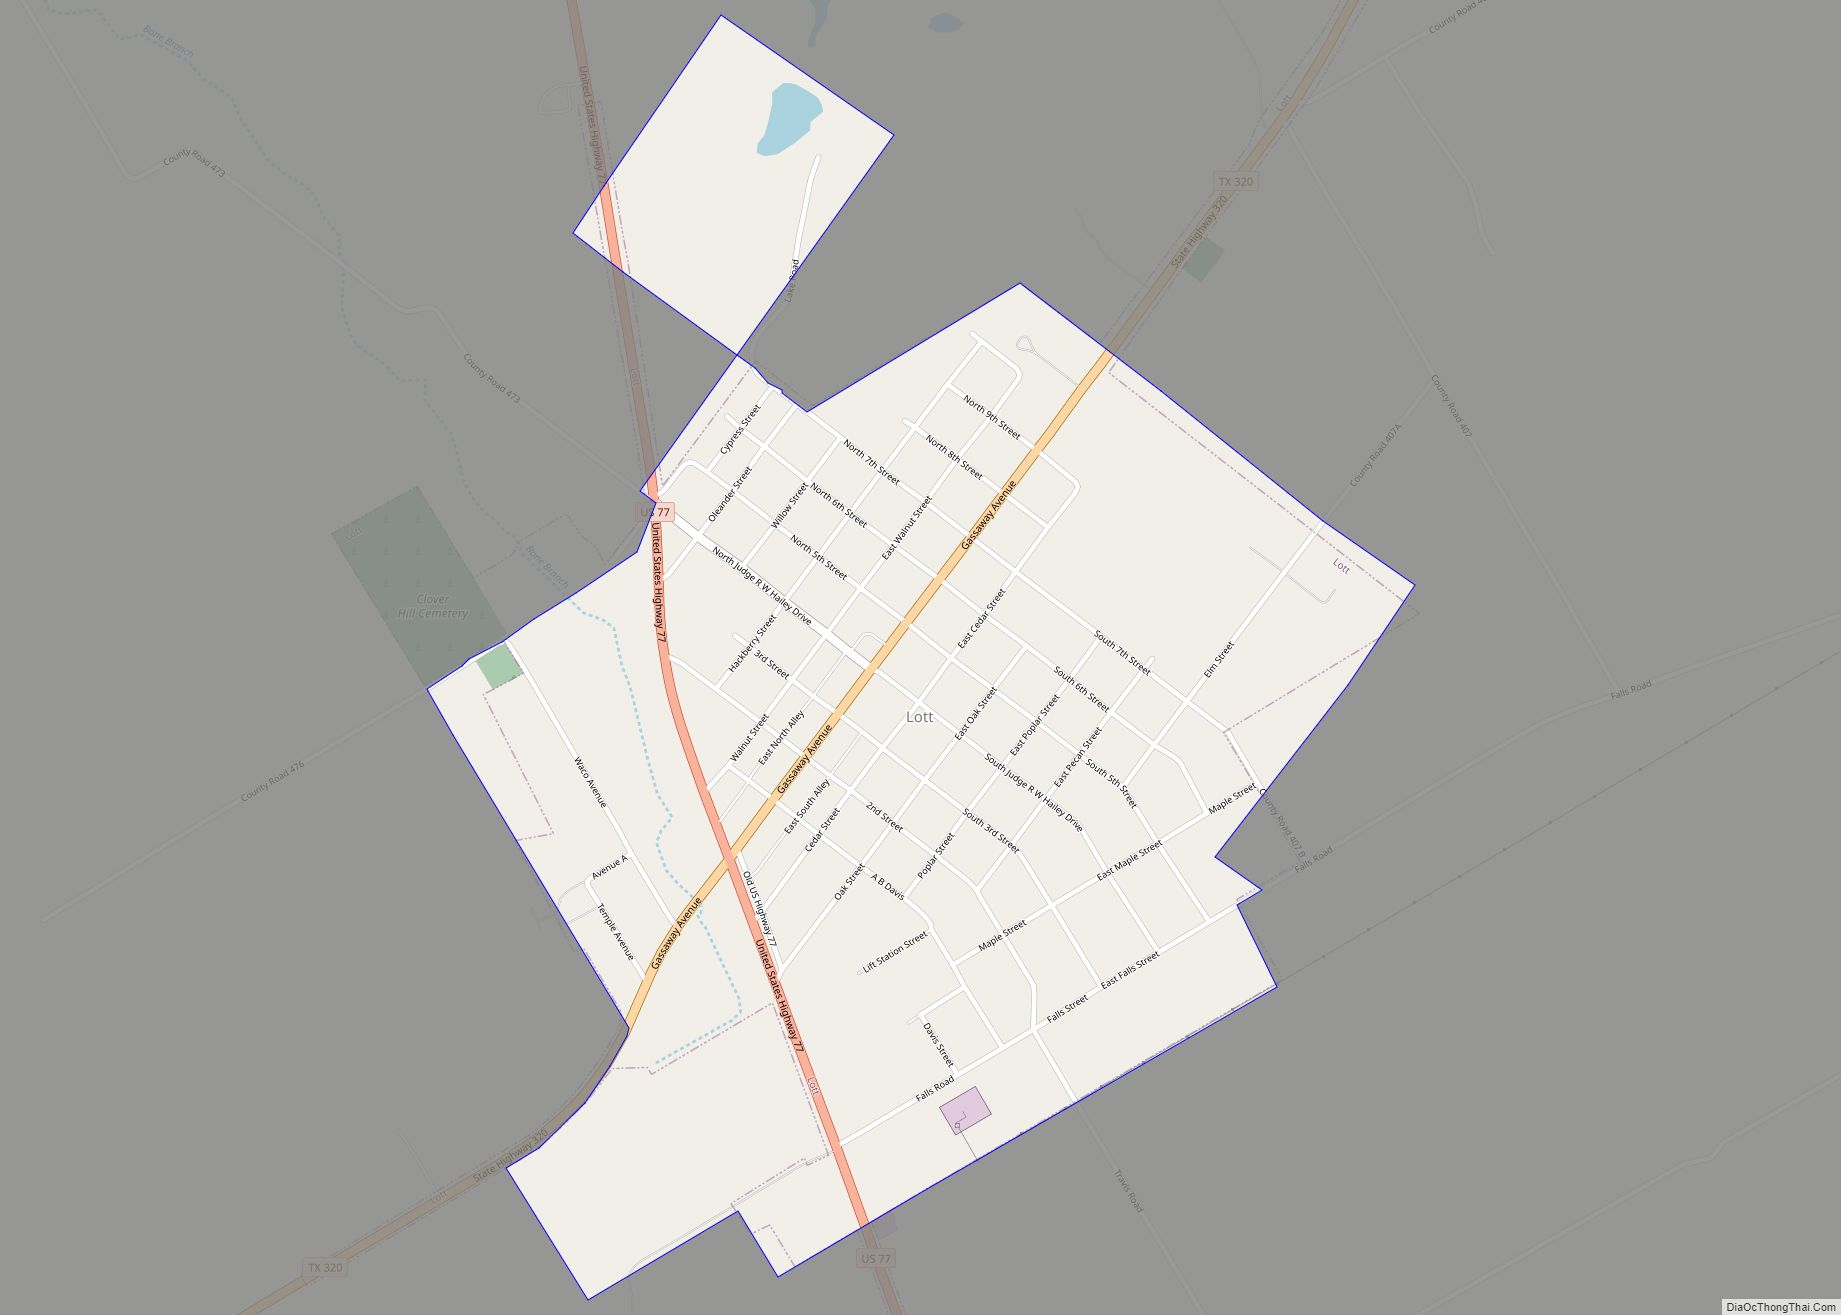 Map of Lott city